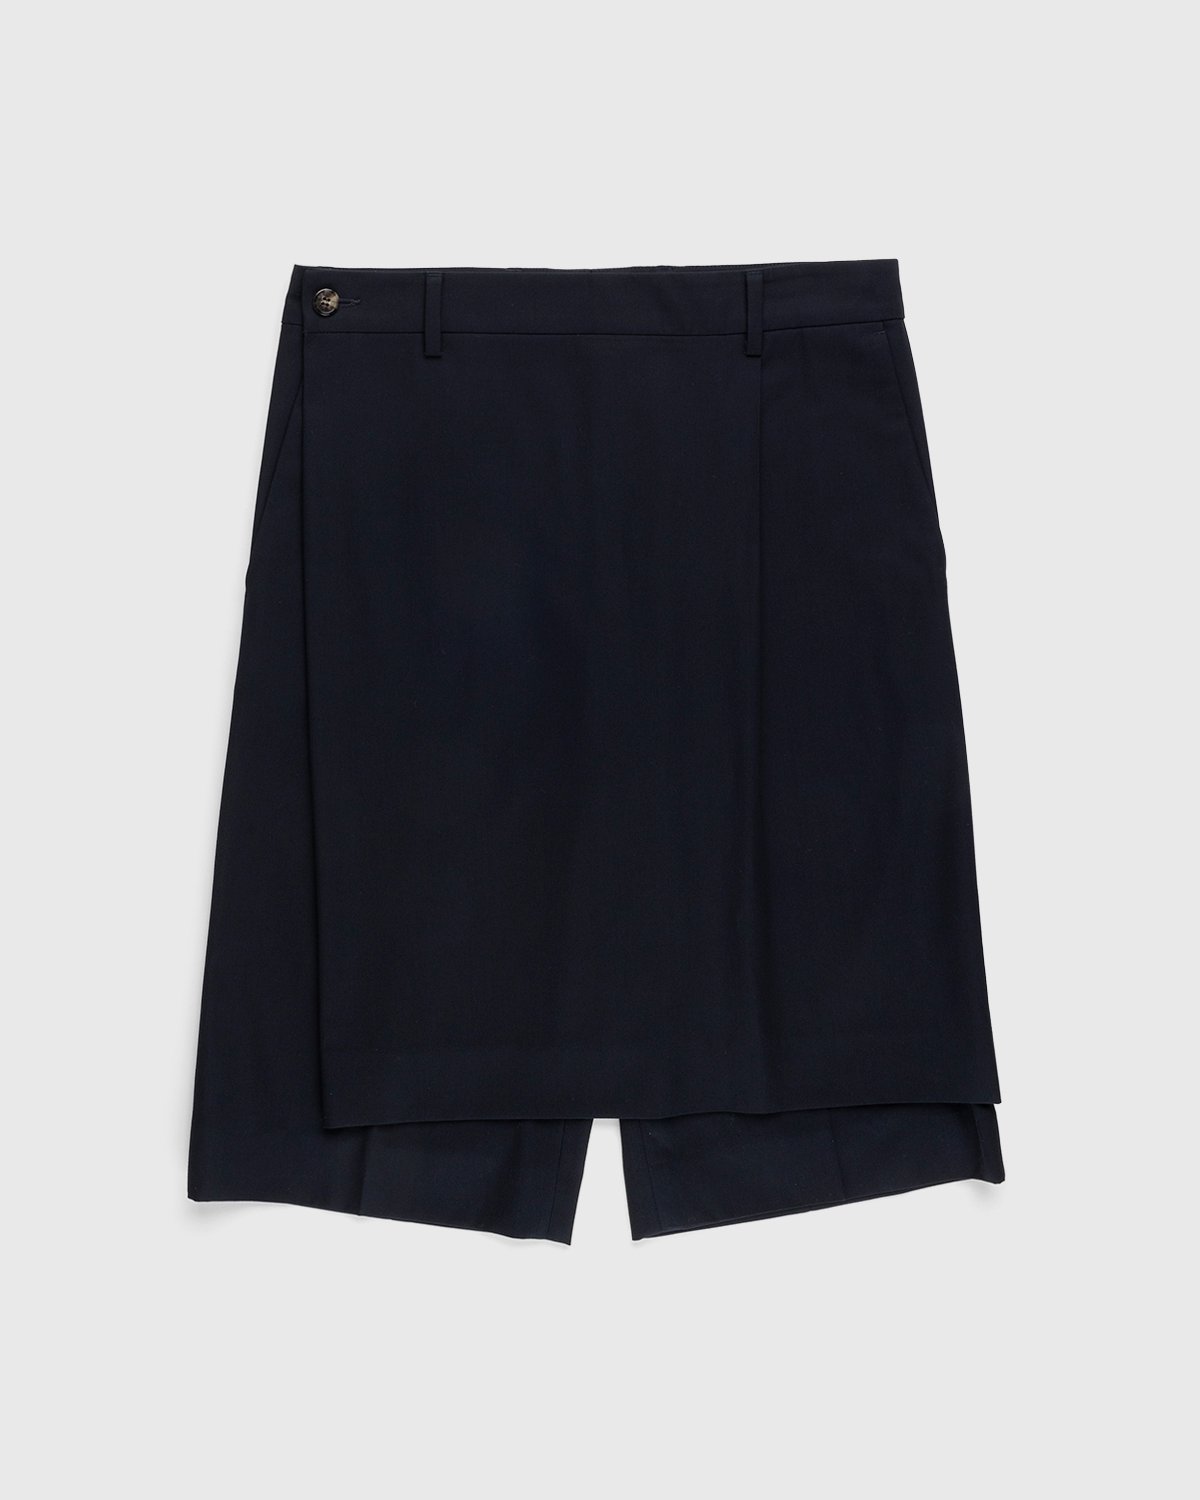 Dries van Noten - Parwin Shorts Navy - Clothing - Blue - Image 1